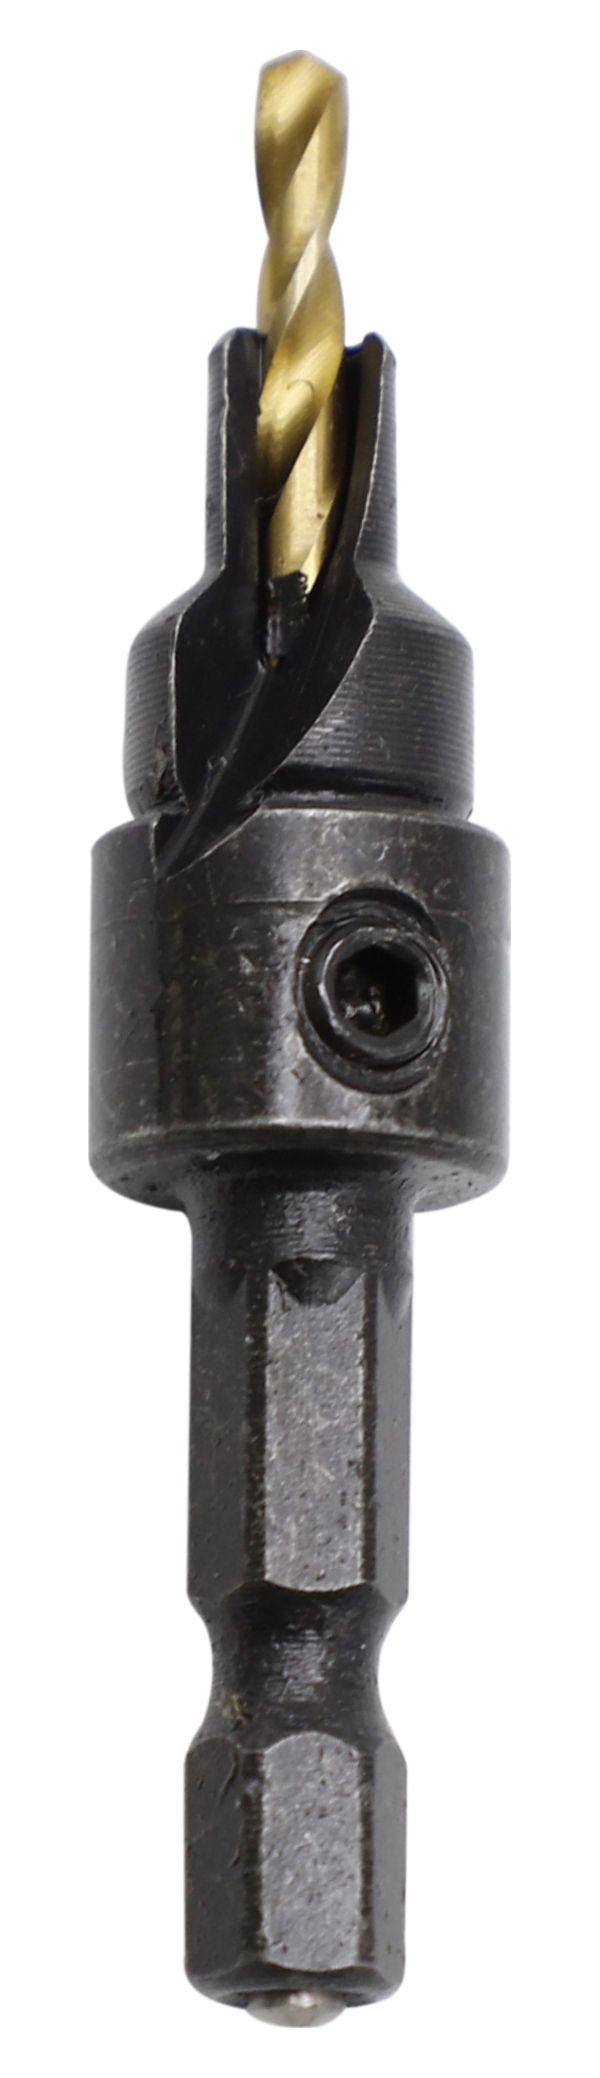 Wickes Countersink & Pilot Hole Drill Bit - 13mm